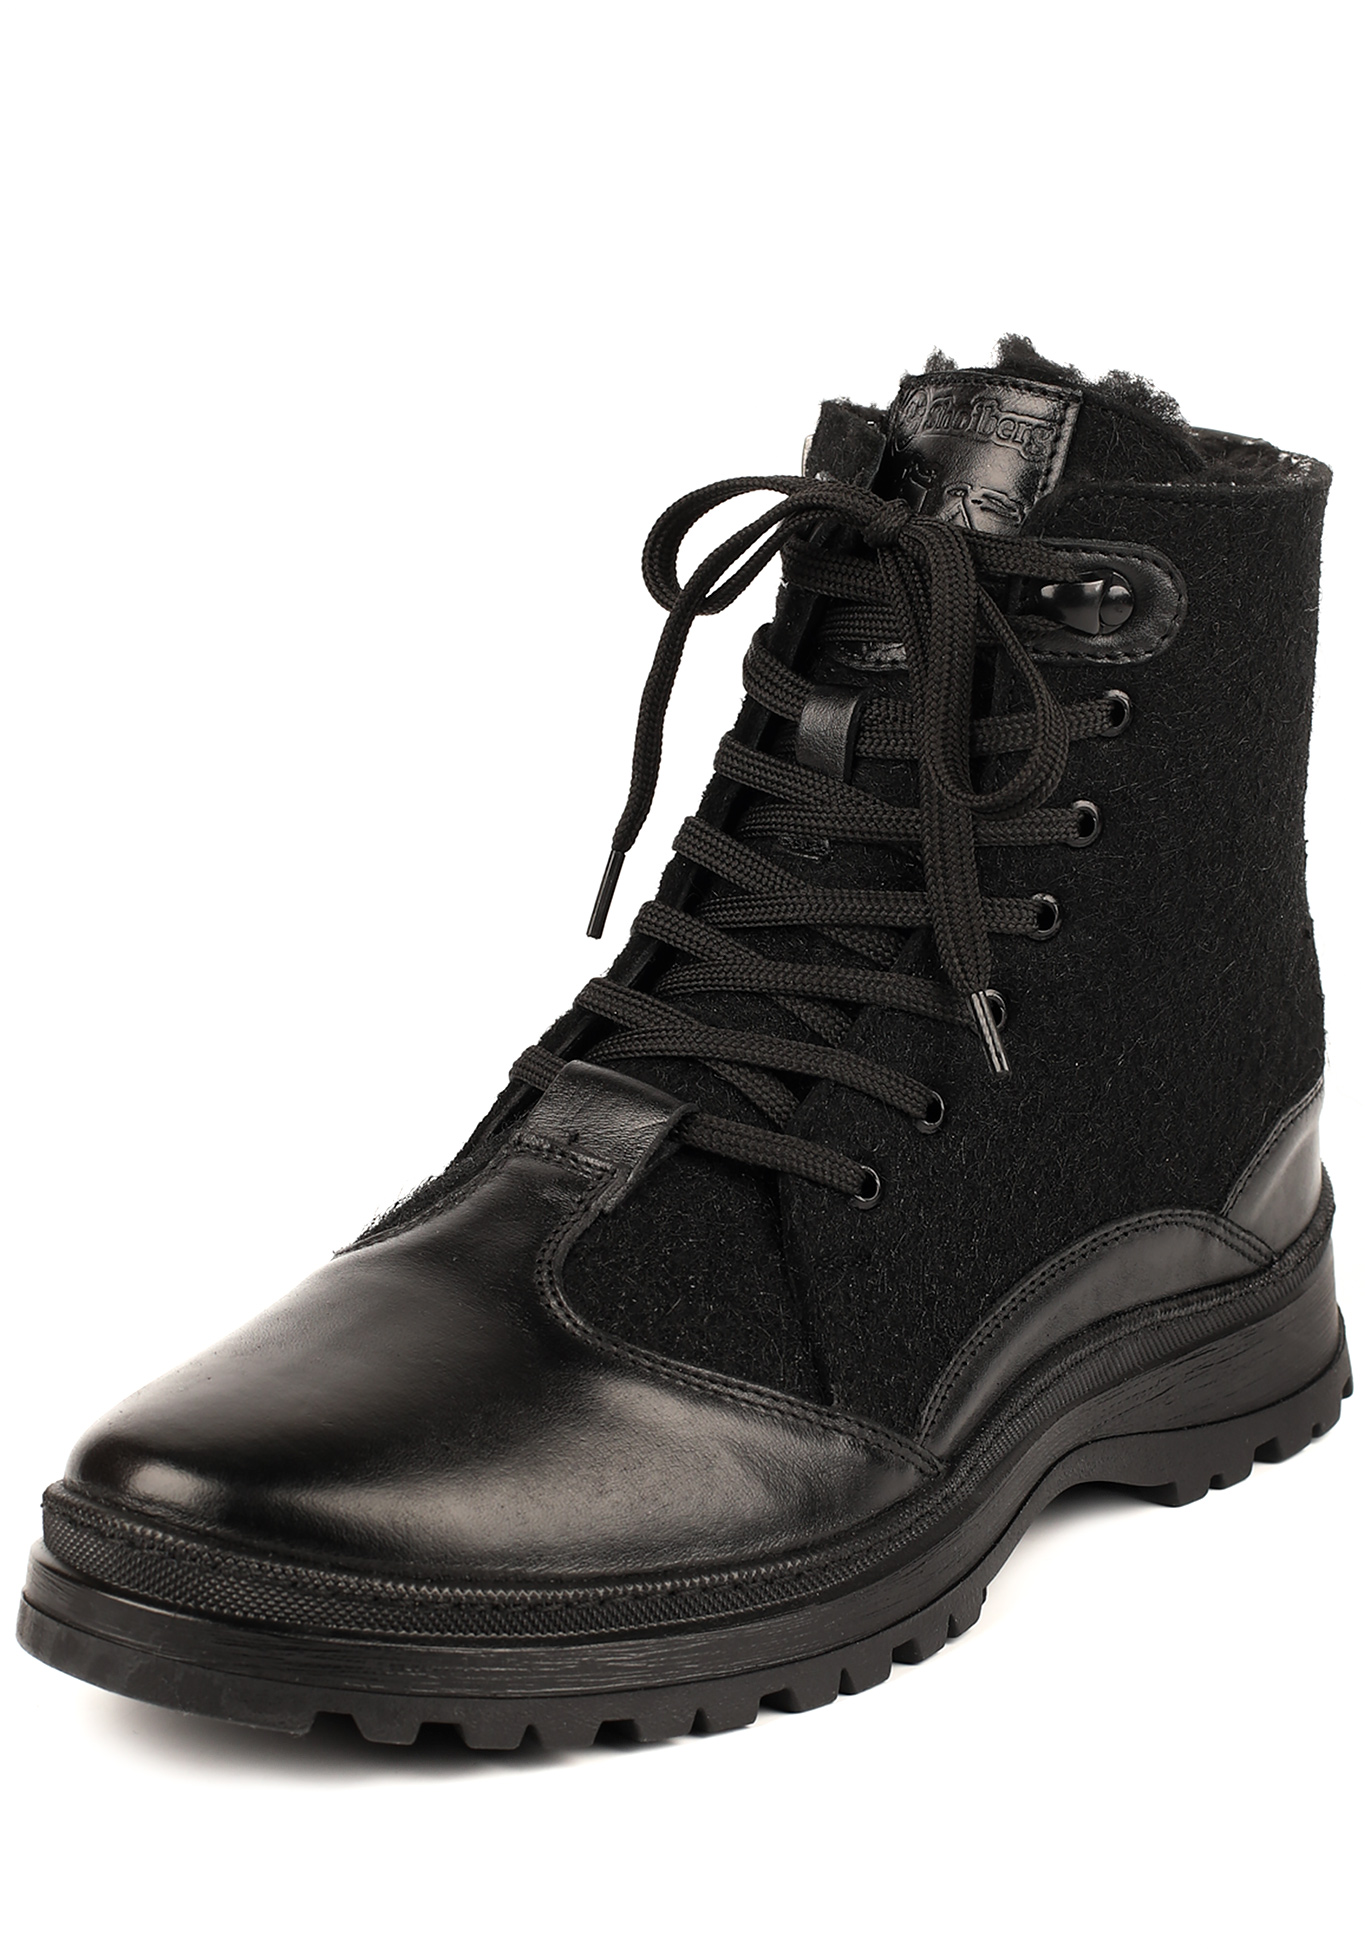 Ботинки мужские "Кален" Shoiberg, размер 42, цвет черный - фото 1